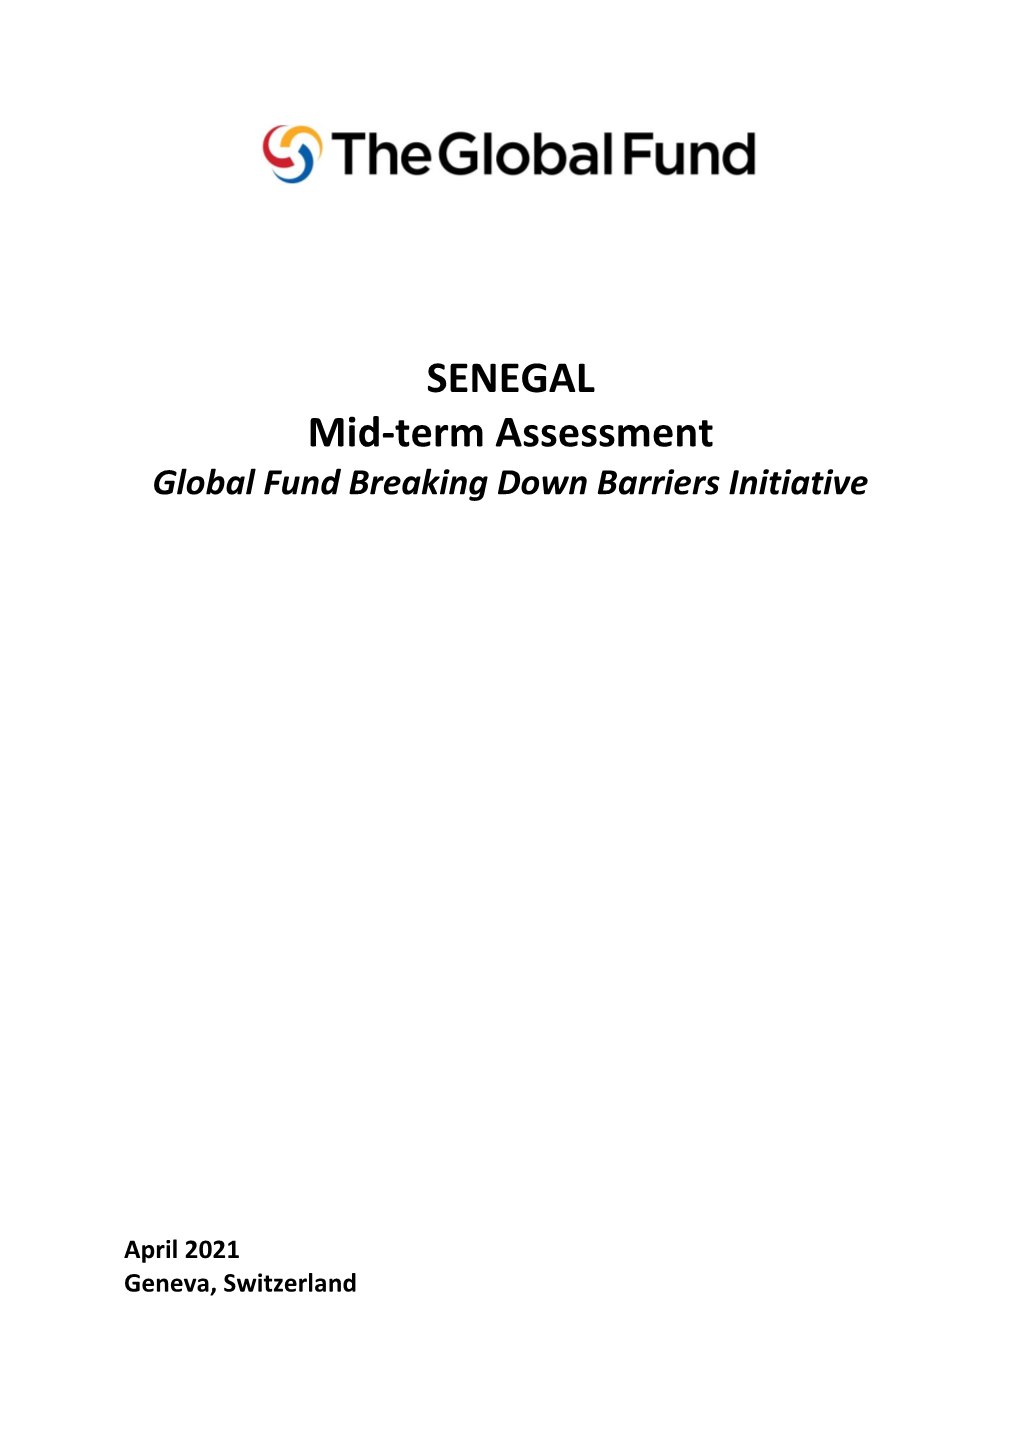 SENEGAL Mid-Term Assessment Global Fund Breaking Down Barriers Initiative